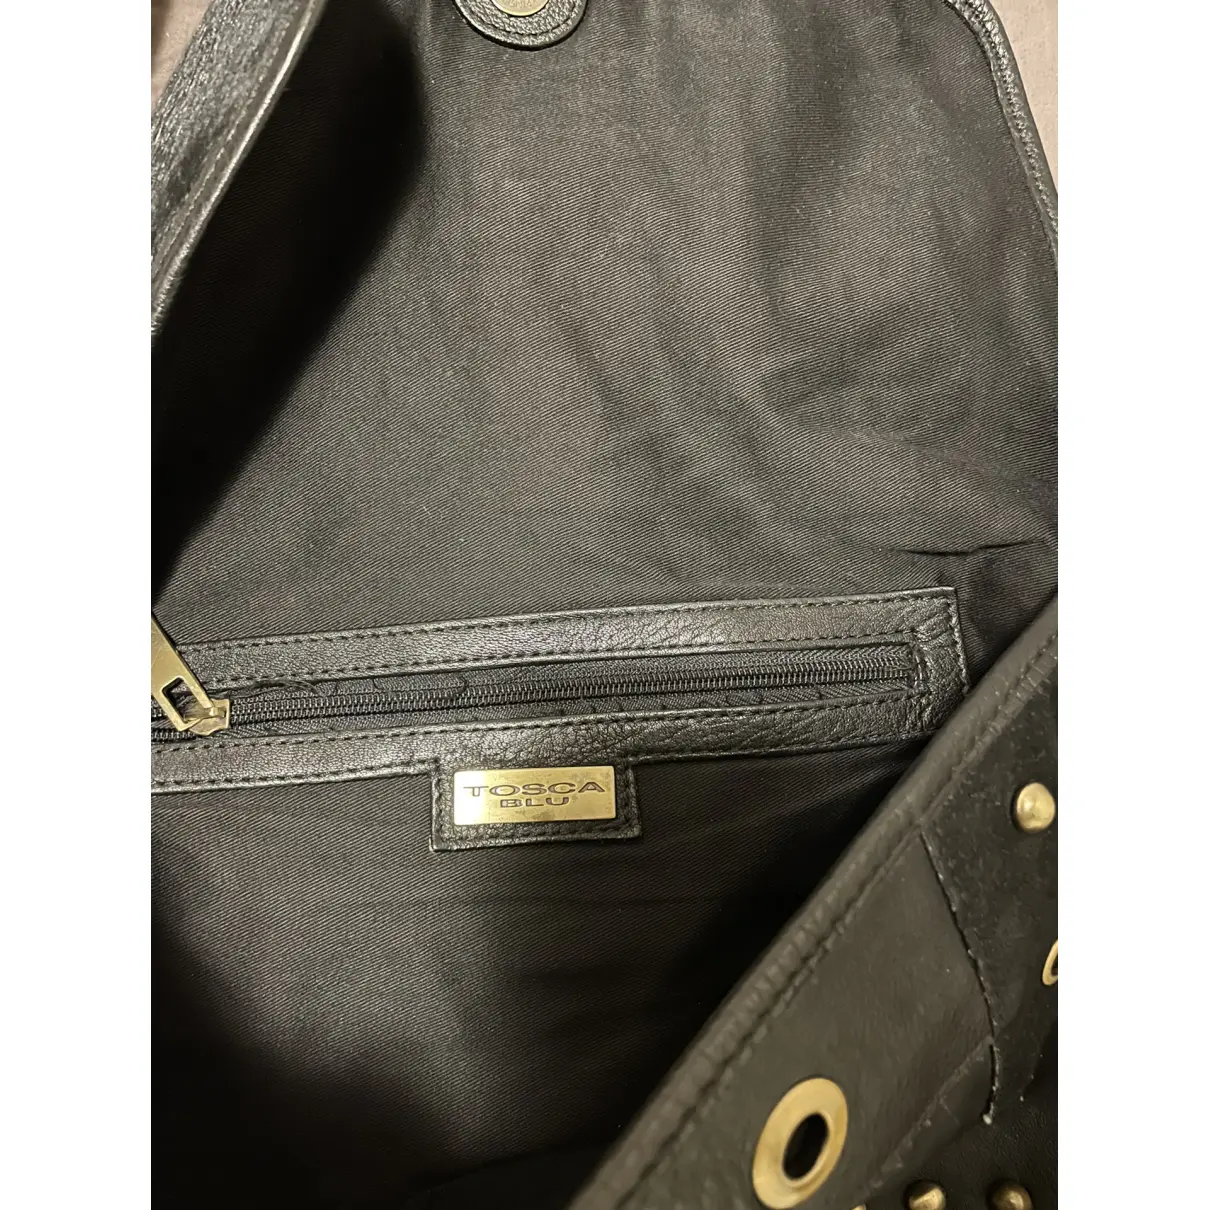 Buy Tosca Blu Pony-style calfskin handbag online